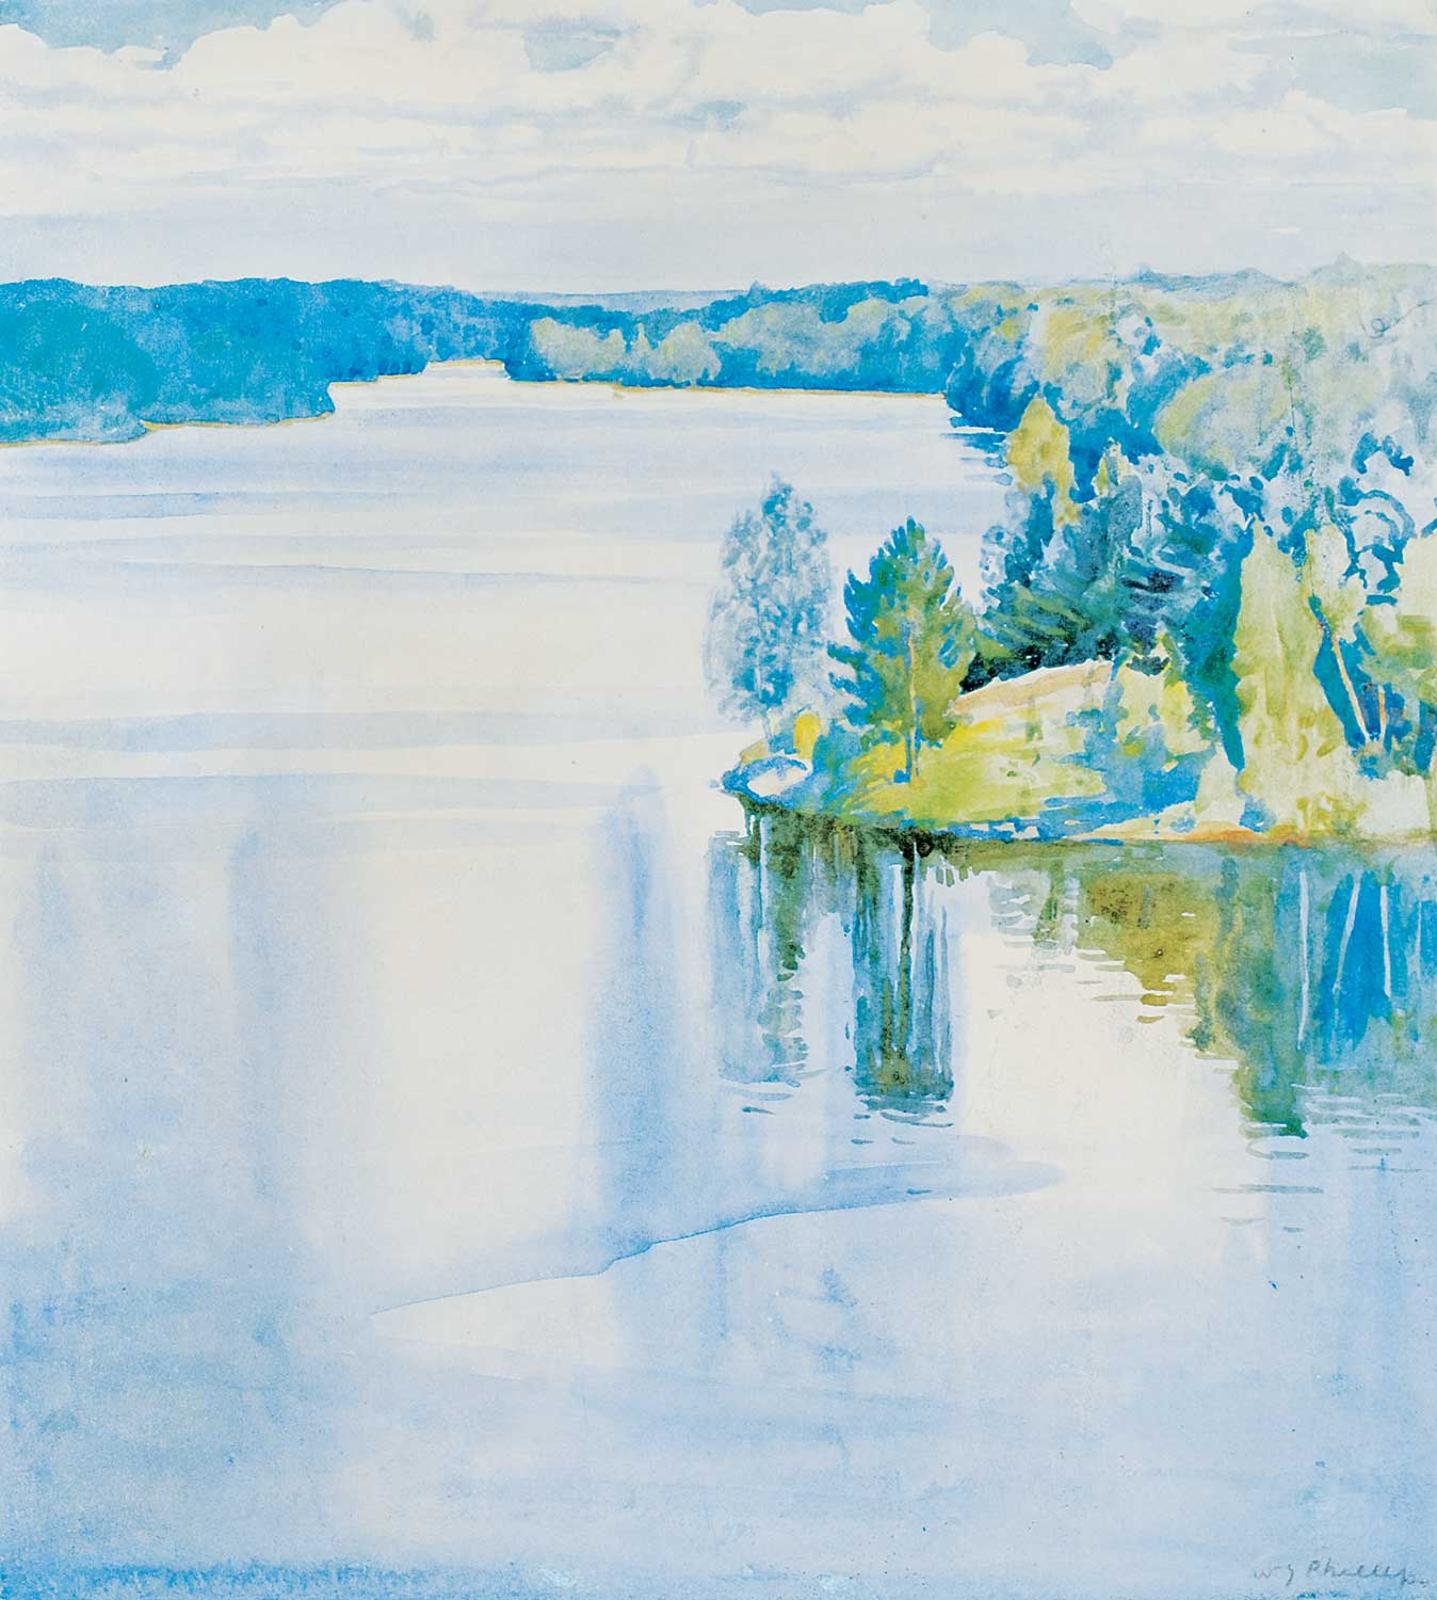 Walter Joseph (W.J.) Phillips (1884-1963) - Untitled - Lake of the Woods